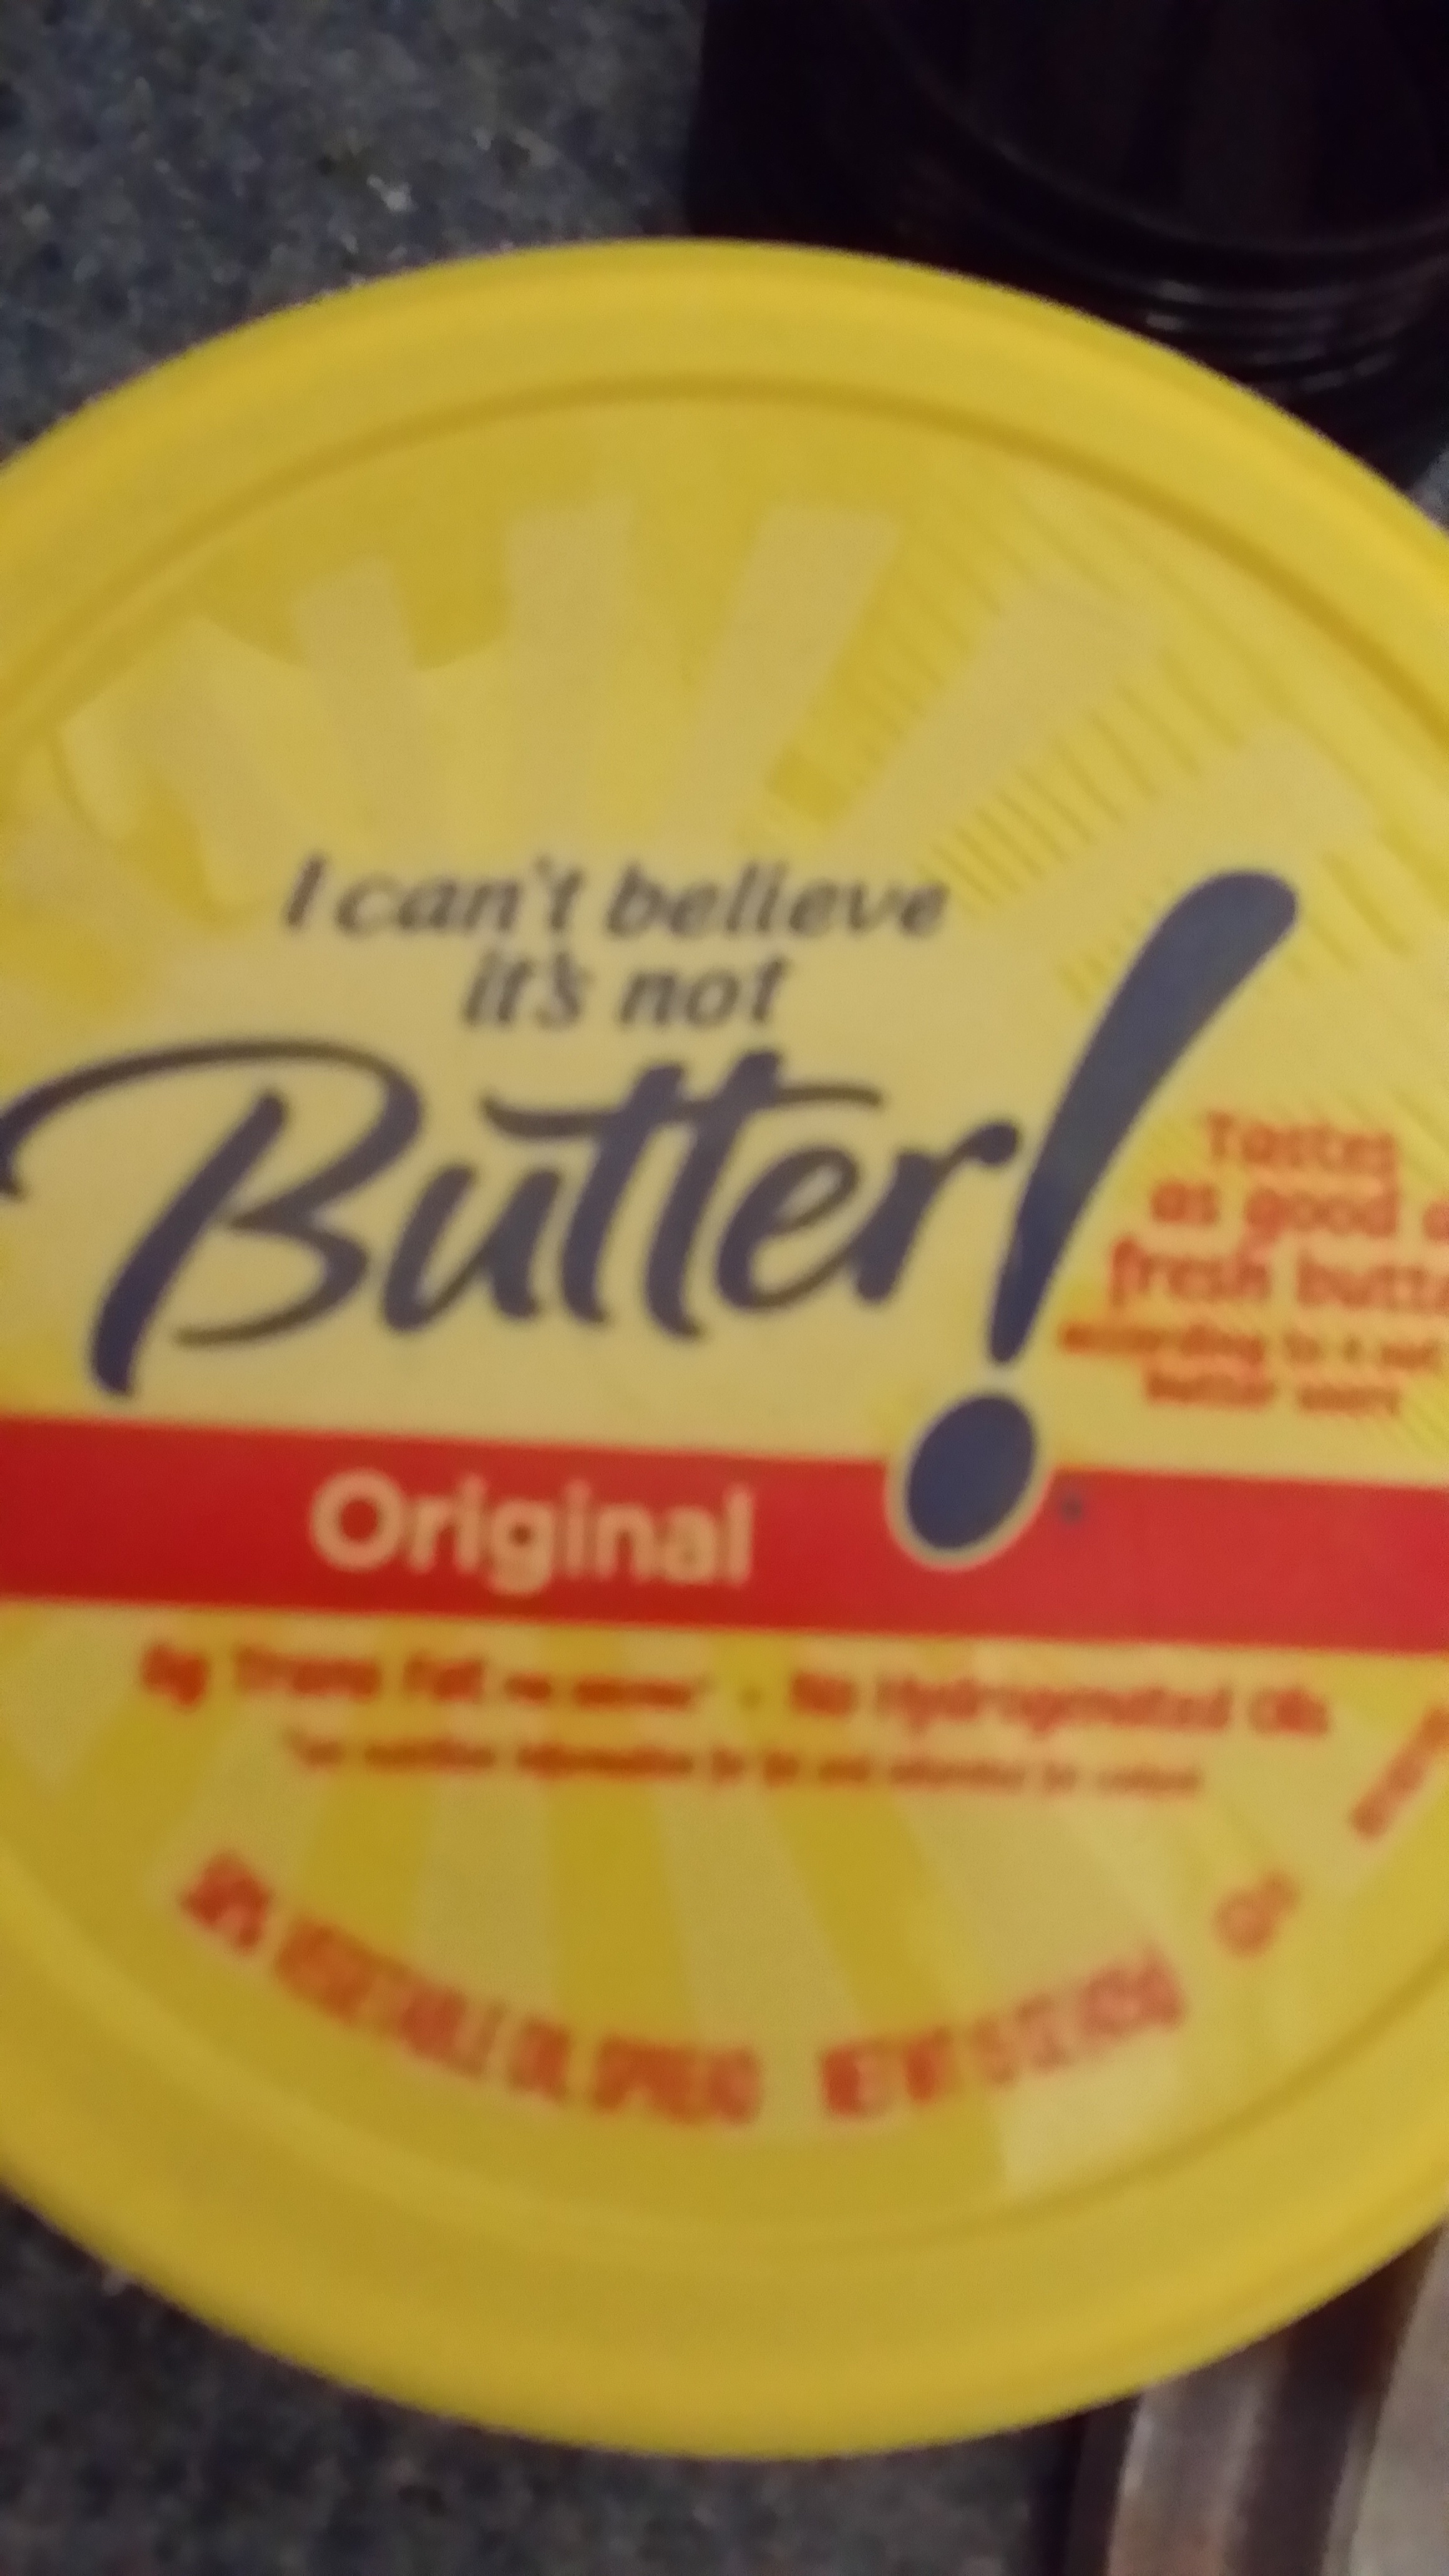 I can't believe it's not butter!, 45% vegetable oil spread, original - Produkt - en